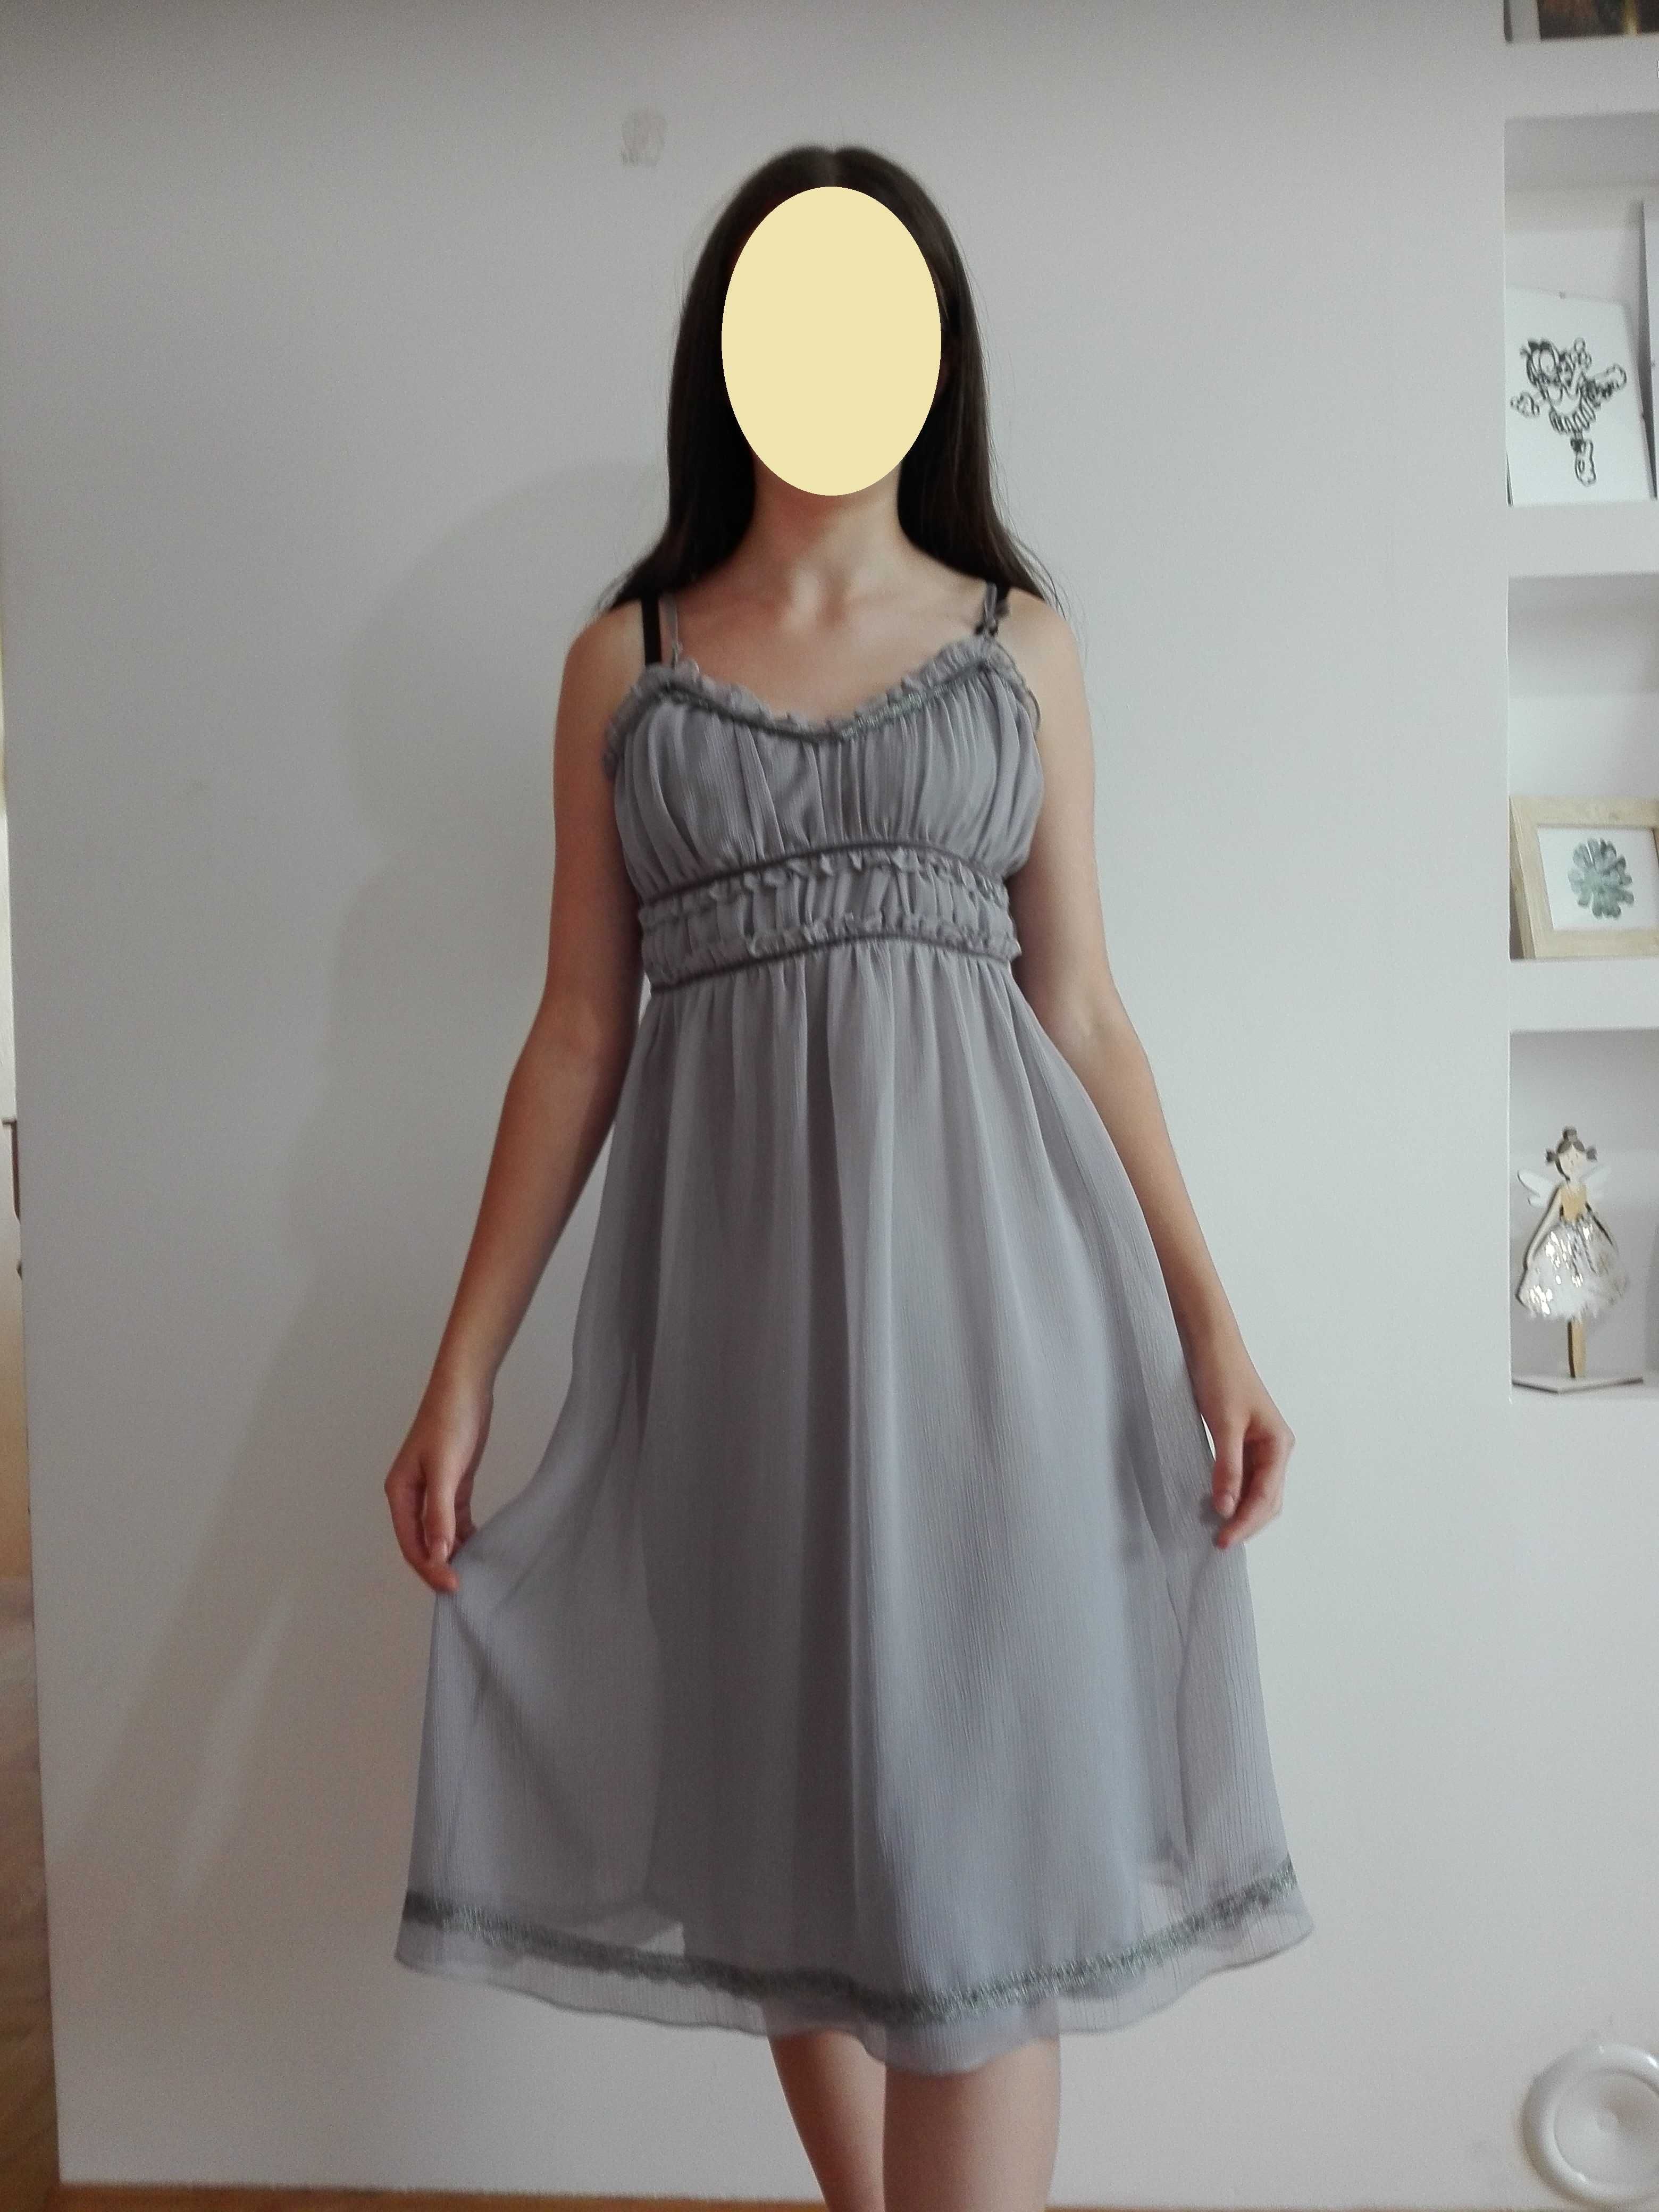 szara, zwiewna sukienka na lato, r. 36, S/XS, New Look